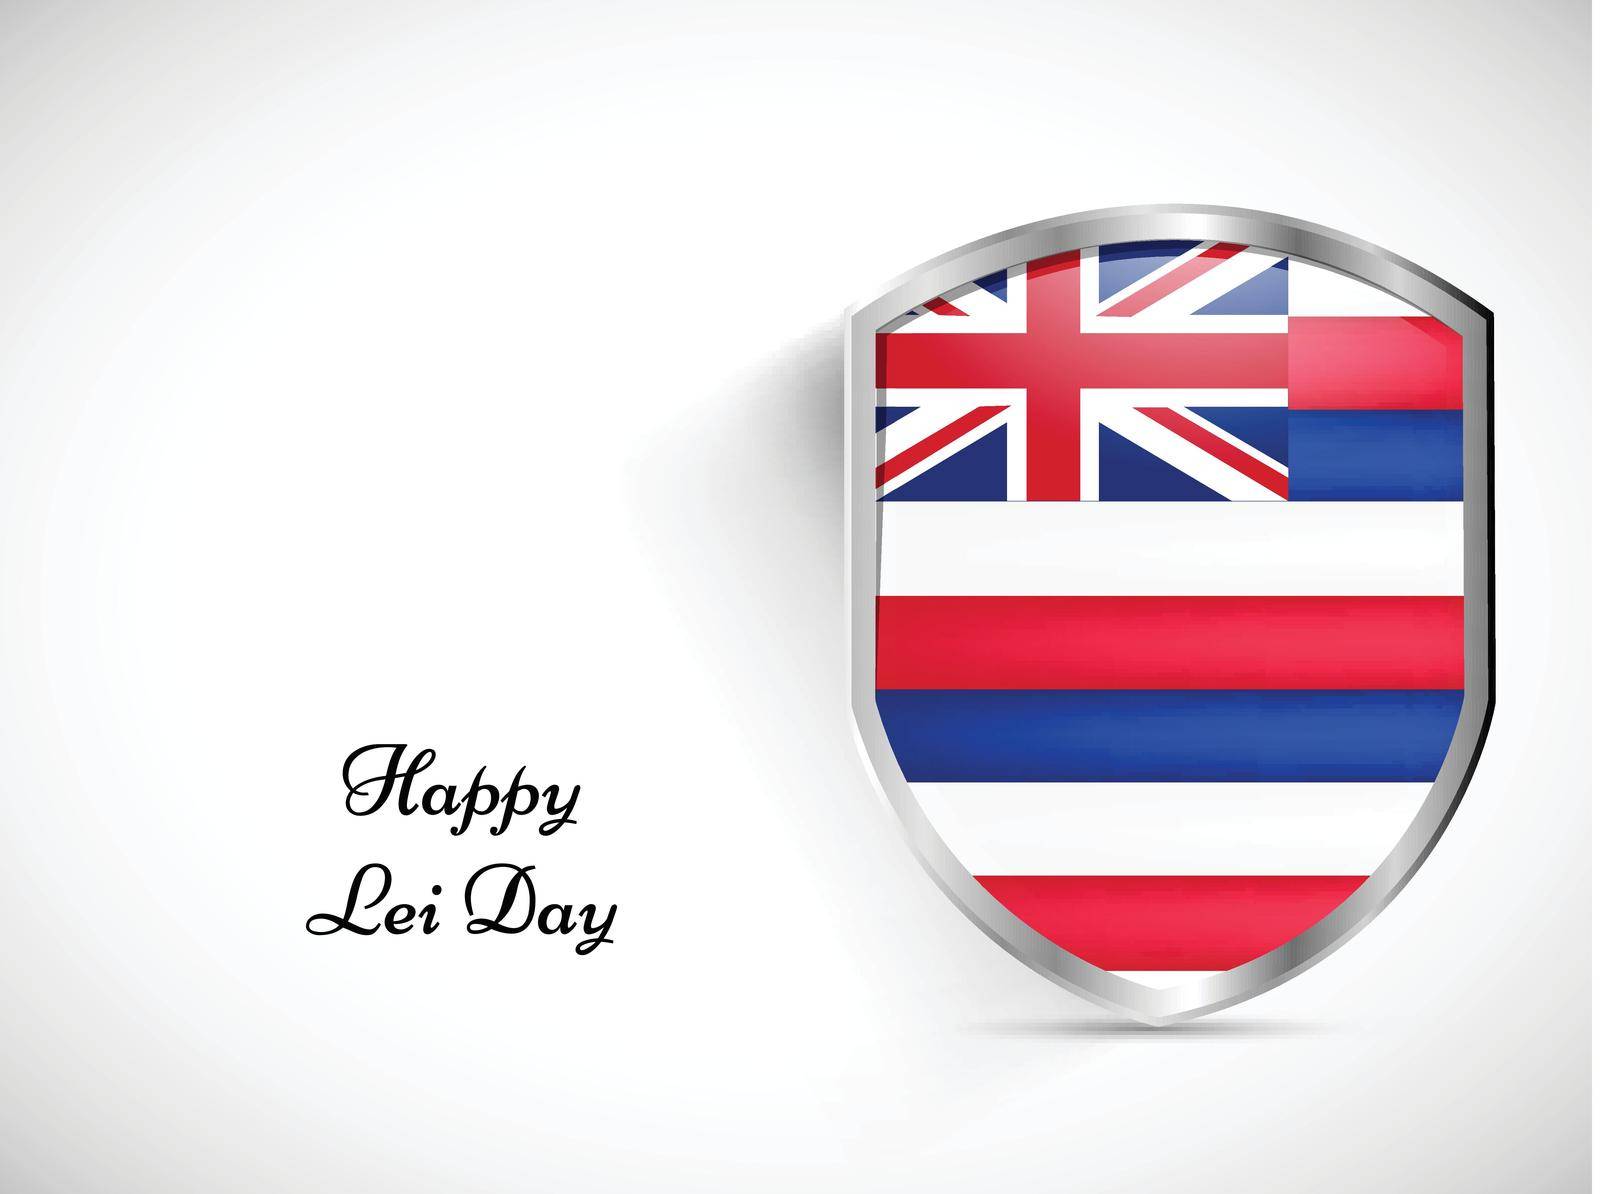 Hawaiian Lei Day Background by vectorworld